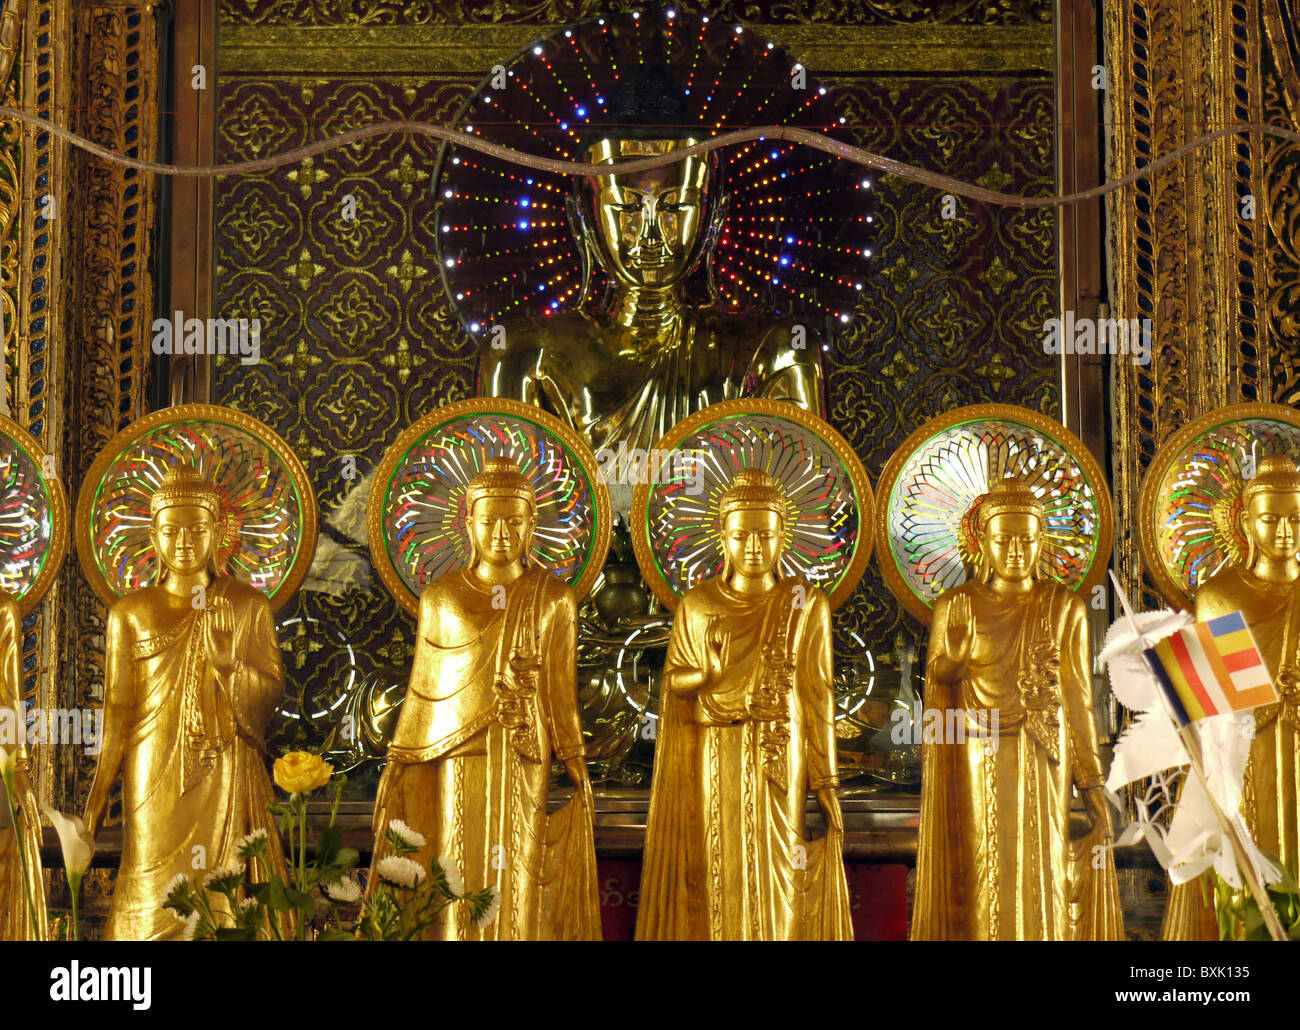 Gold Buddhist statues in the Sule Pagoda, Yangon, Burma Stock Photo